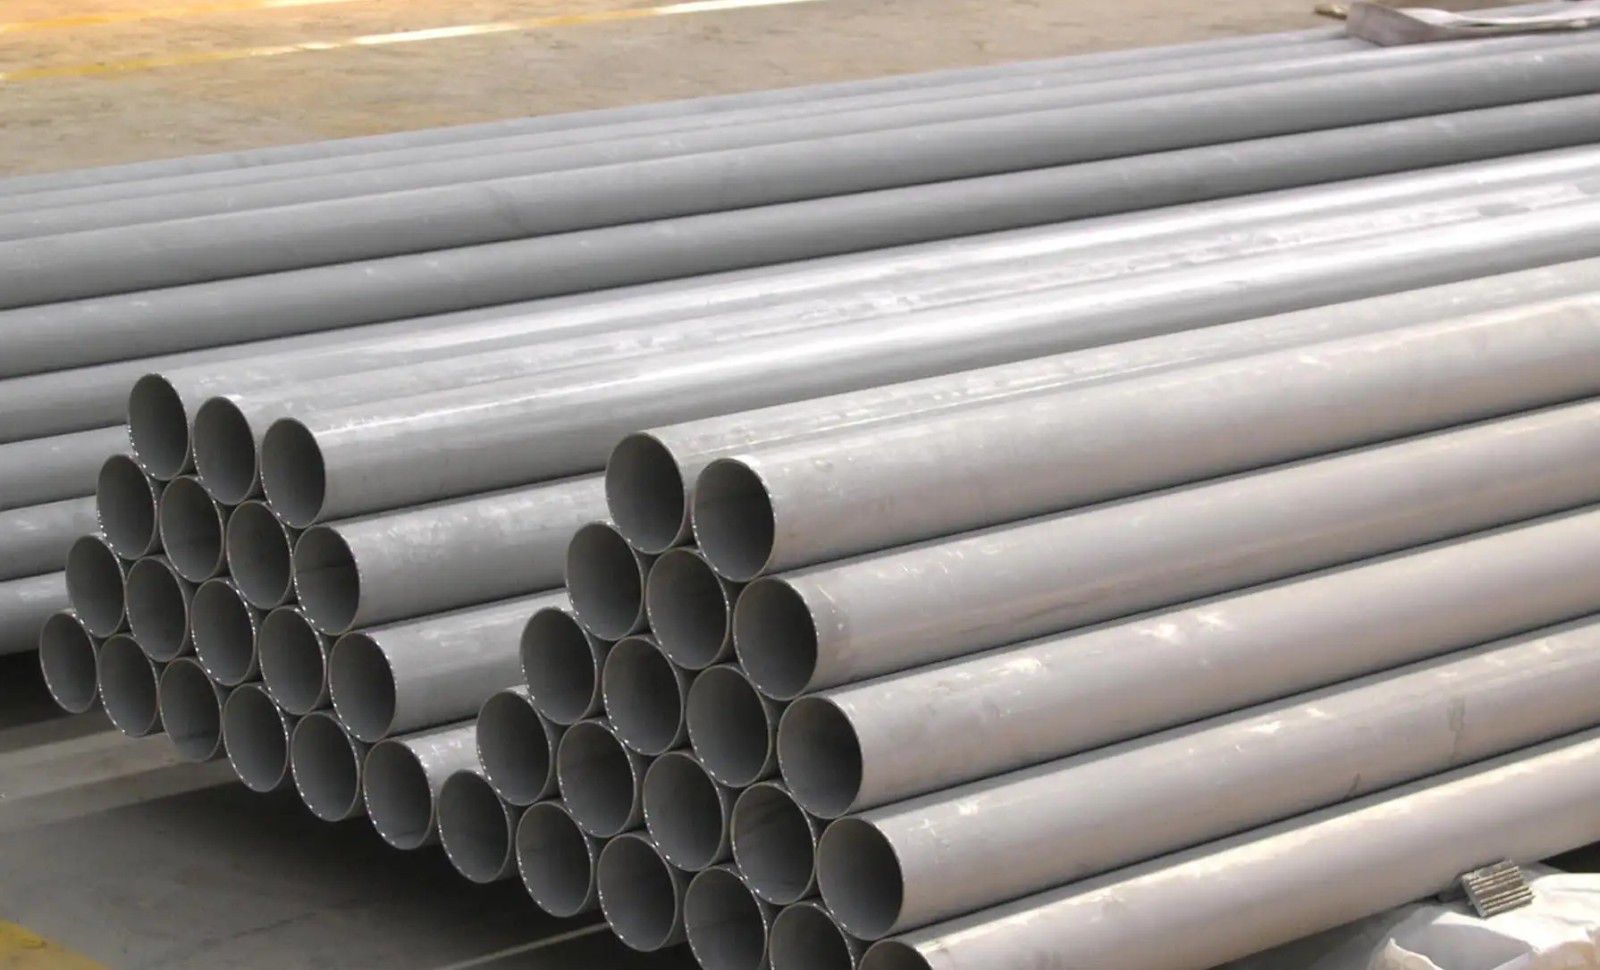 NelspretPrice of 304 stainless steel rodSeveral major misunderstandings of maintenance